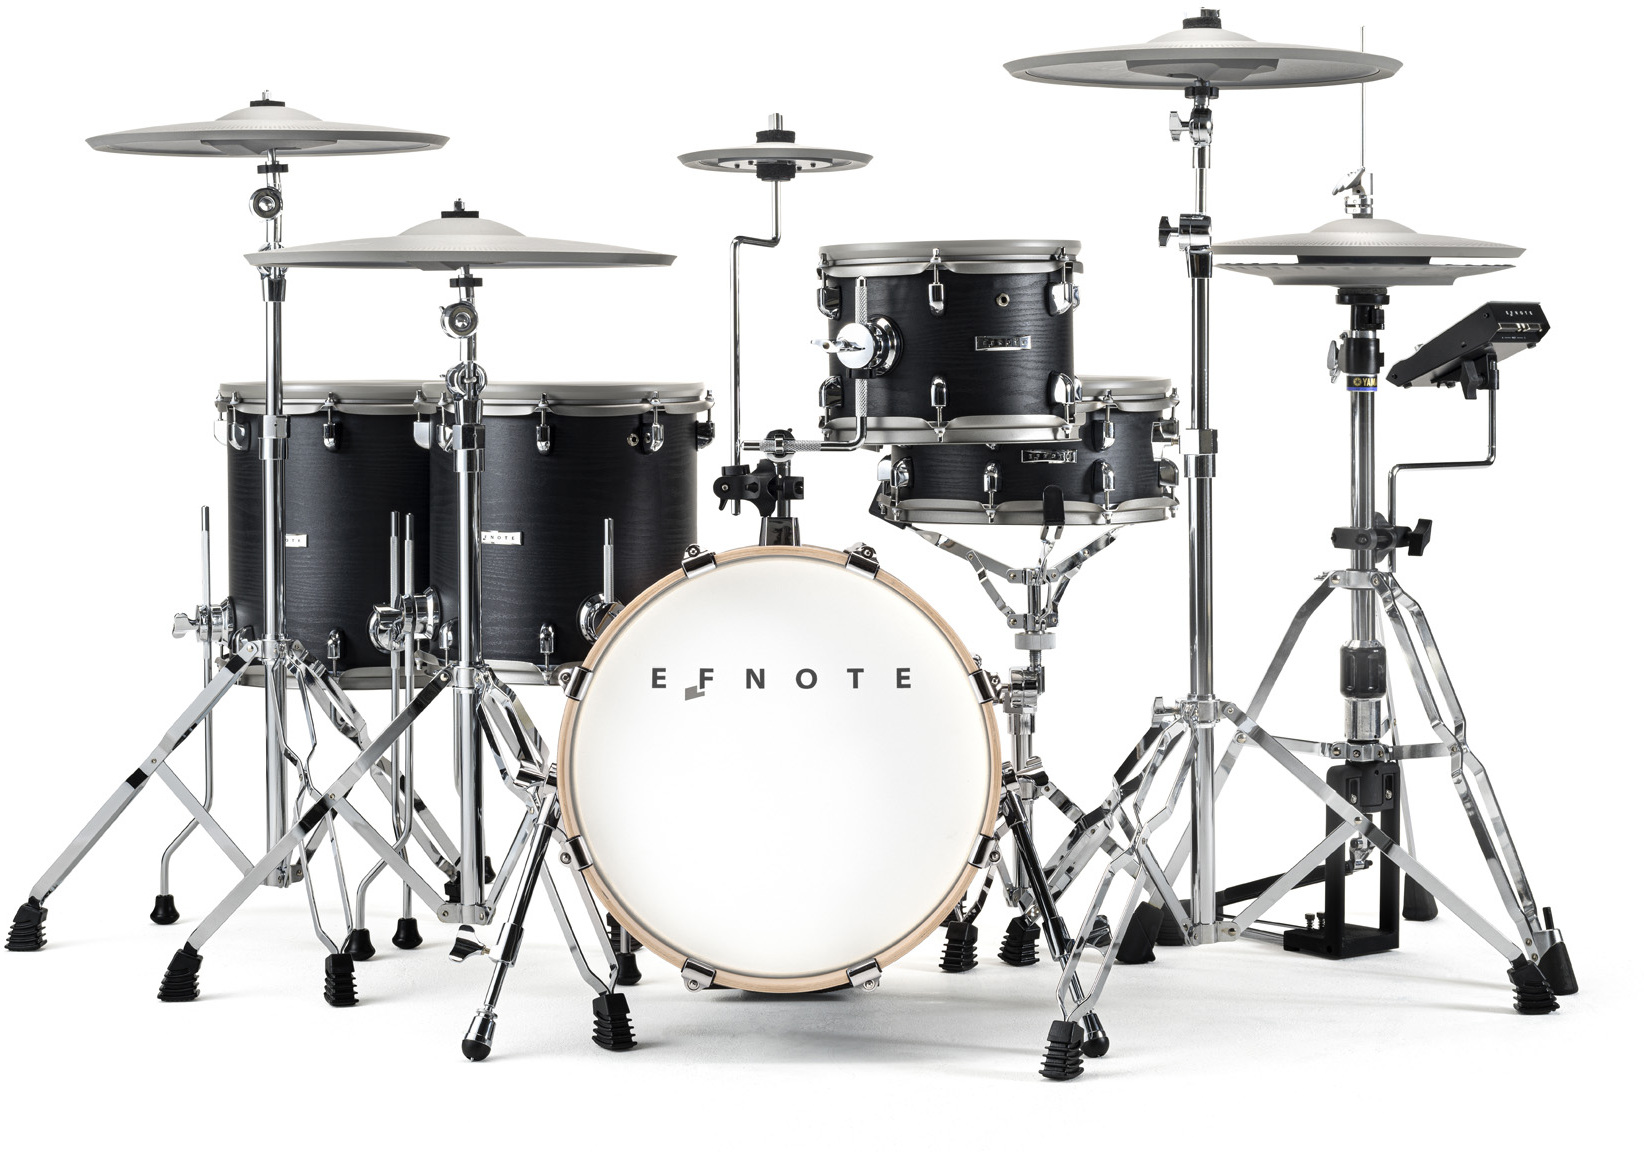 Efnote Efd5x Drum Kit - Electronic drum kit & set - Main picture